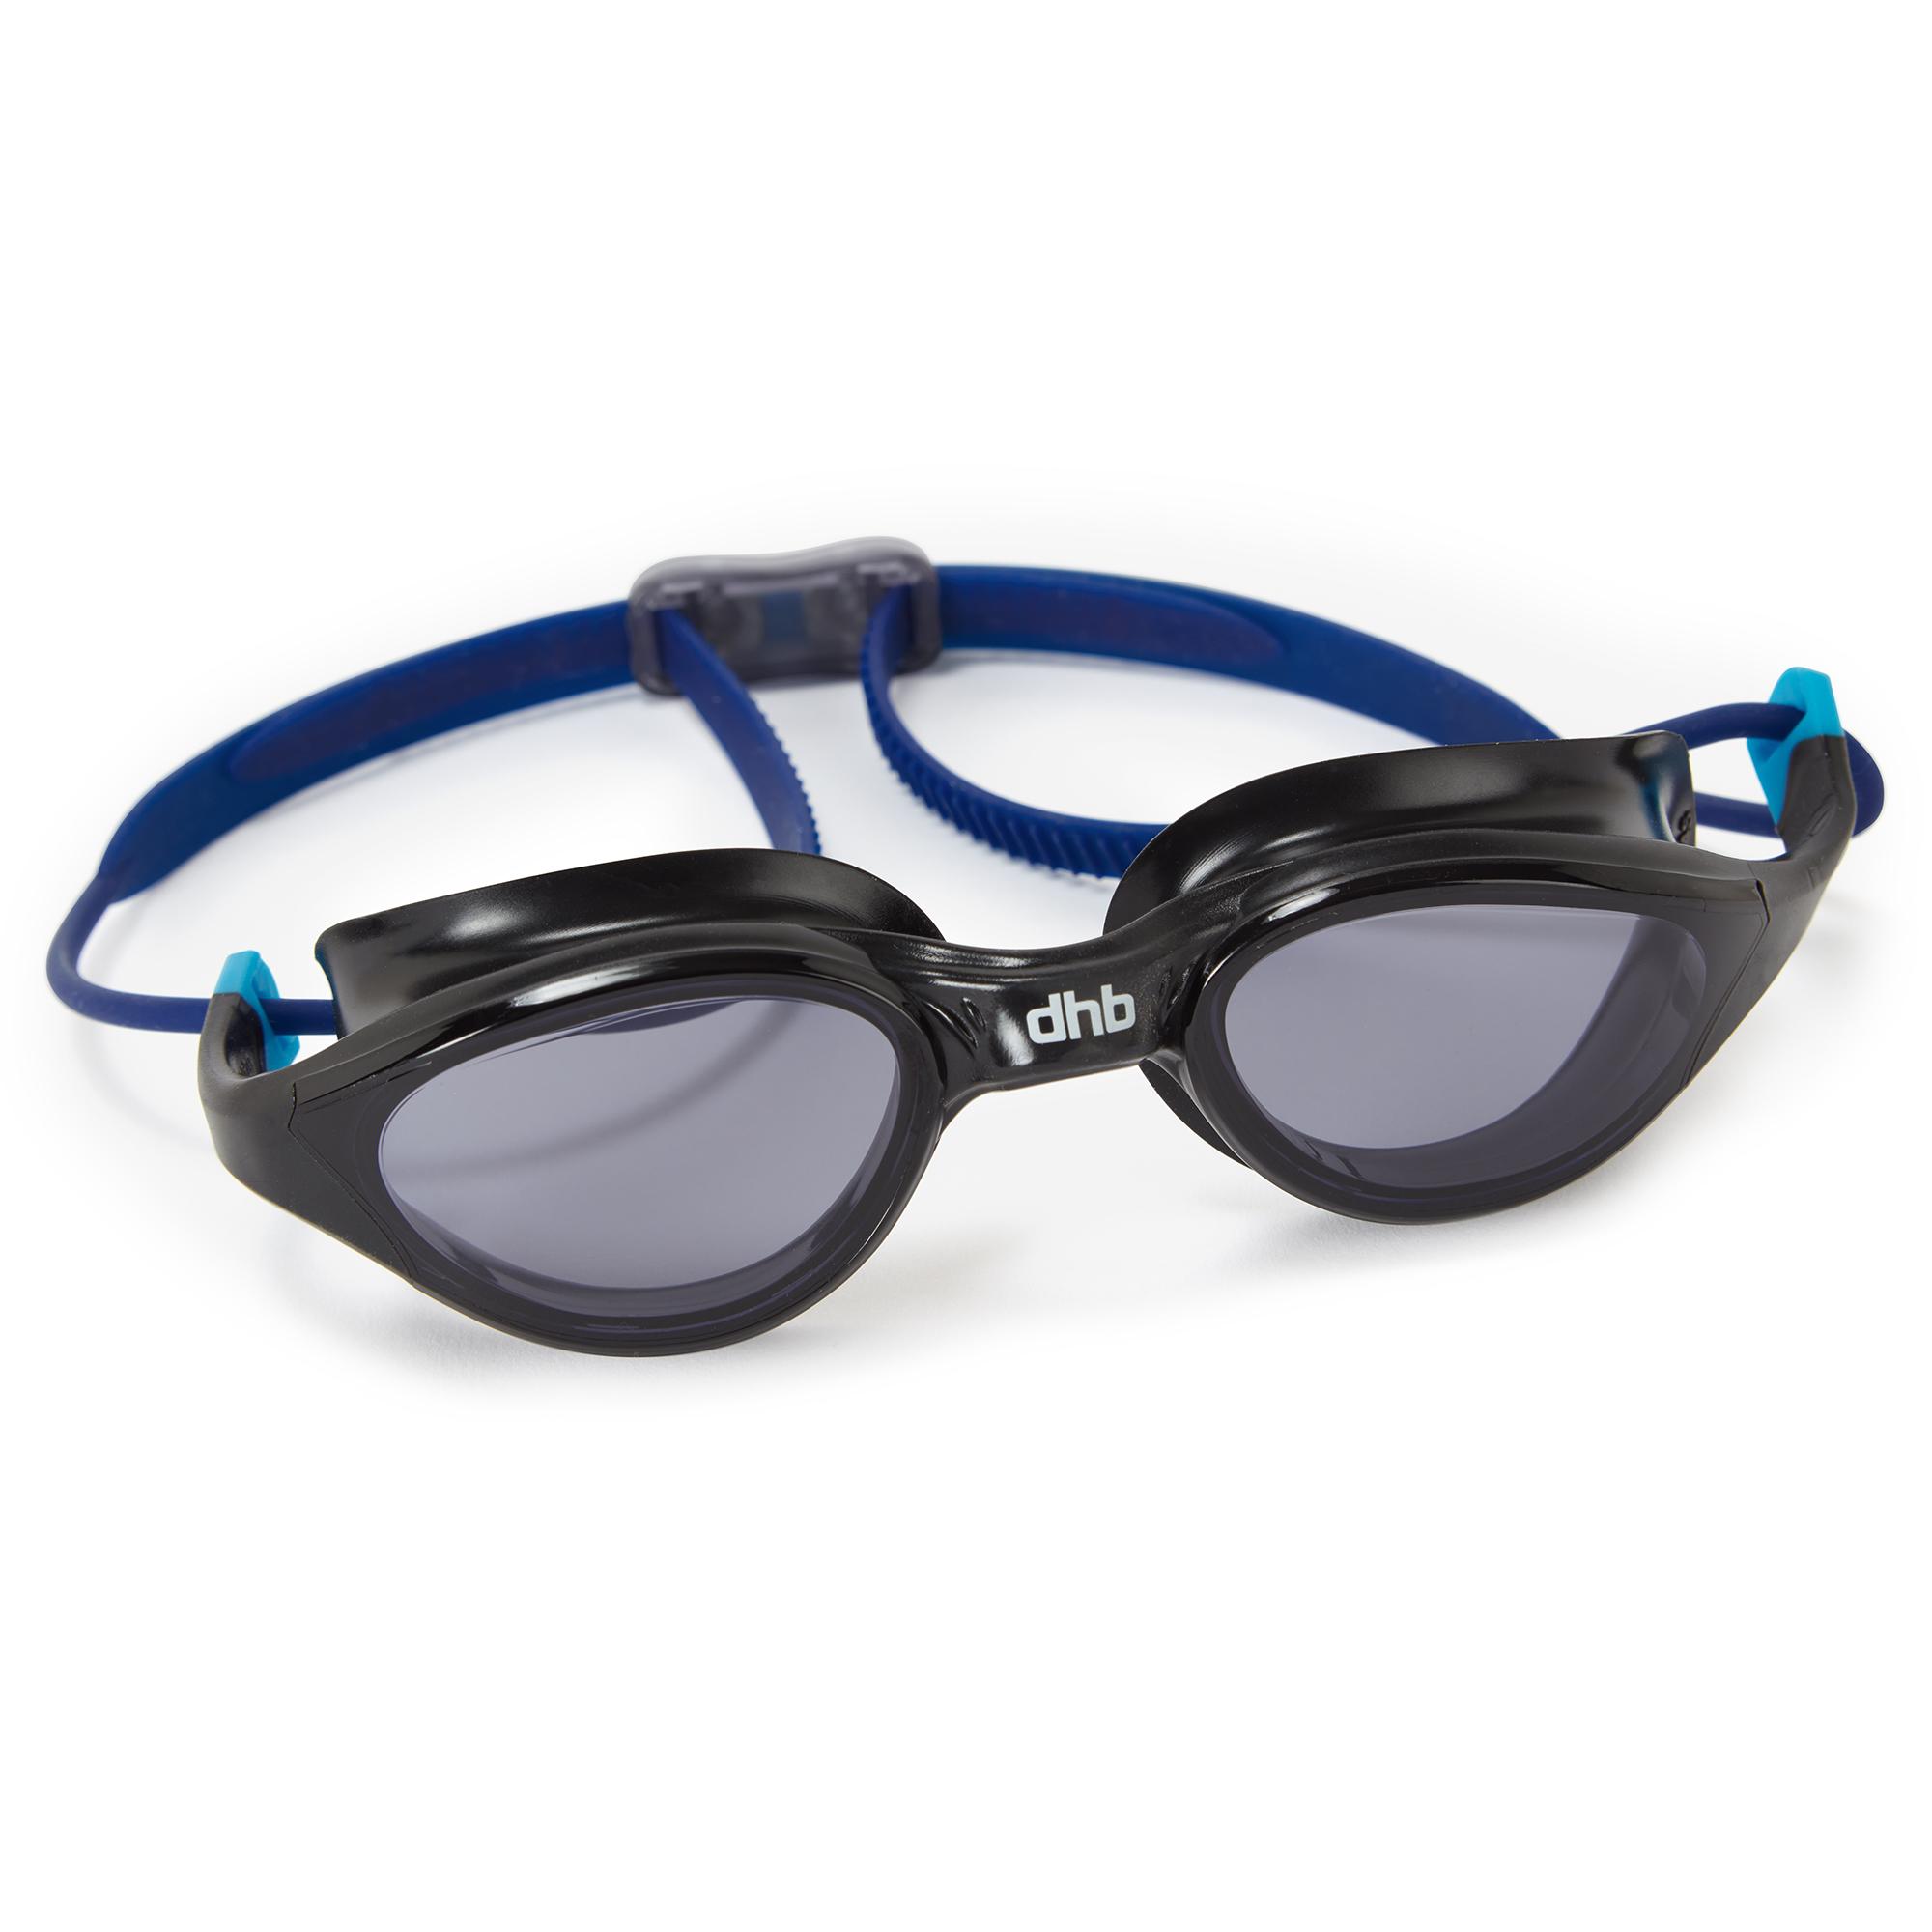 Dhb Aeron Swim Goggles - Clear Lens - Black/blue